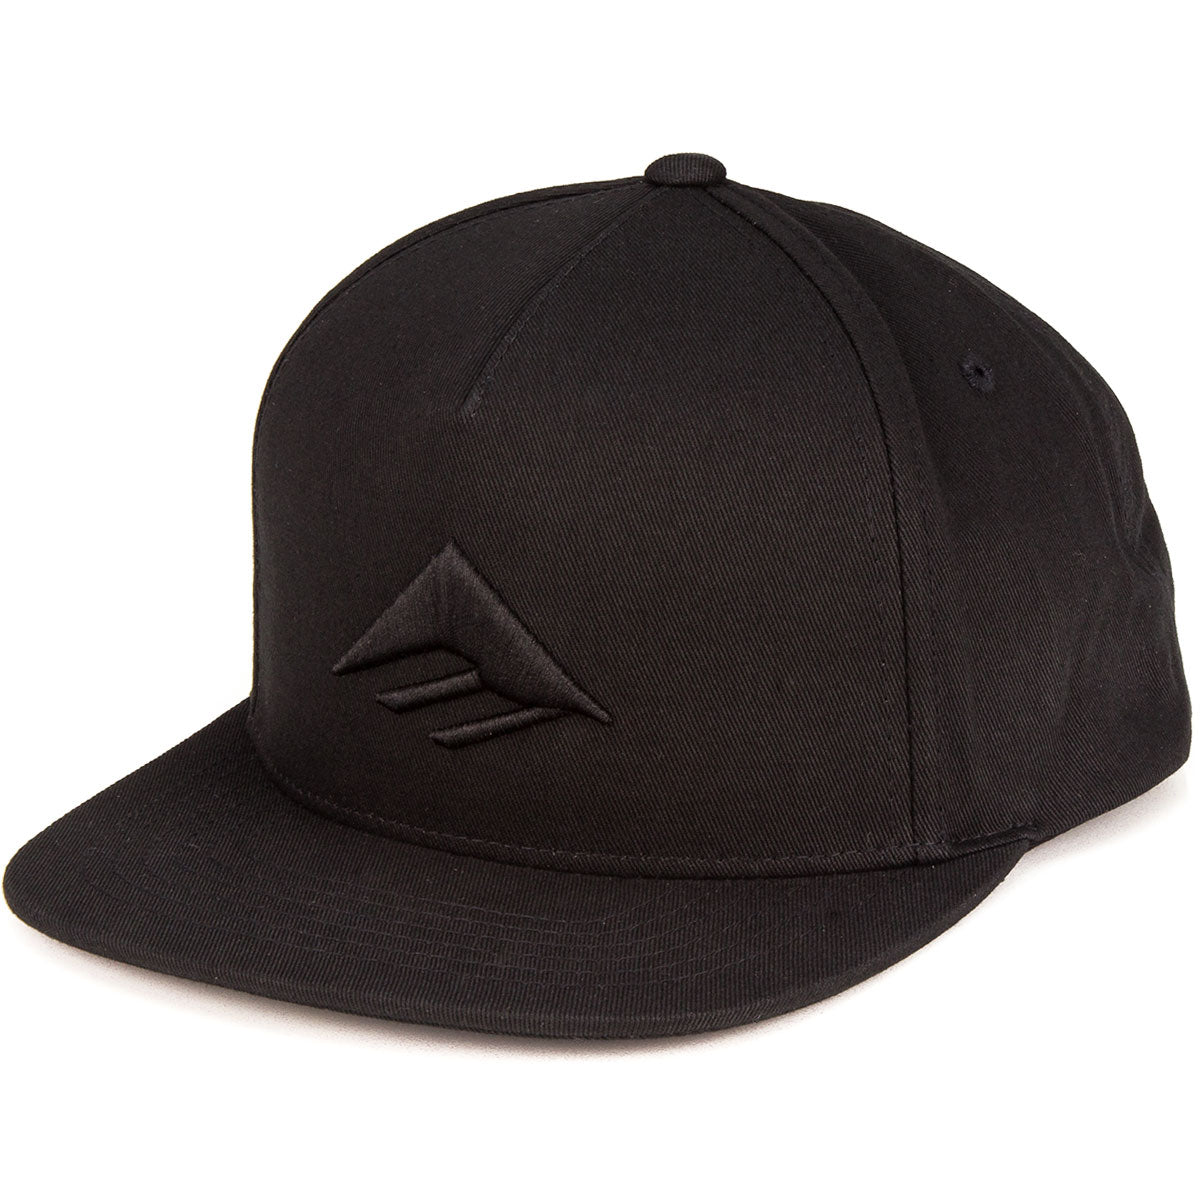 Emerica Triangle Snapback Hat - Black image 1